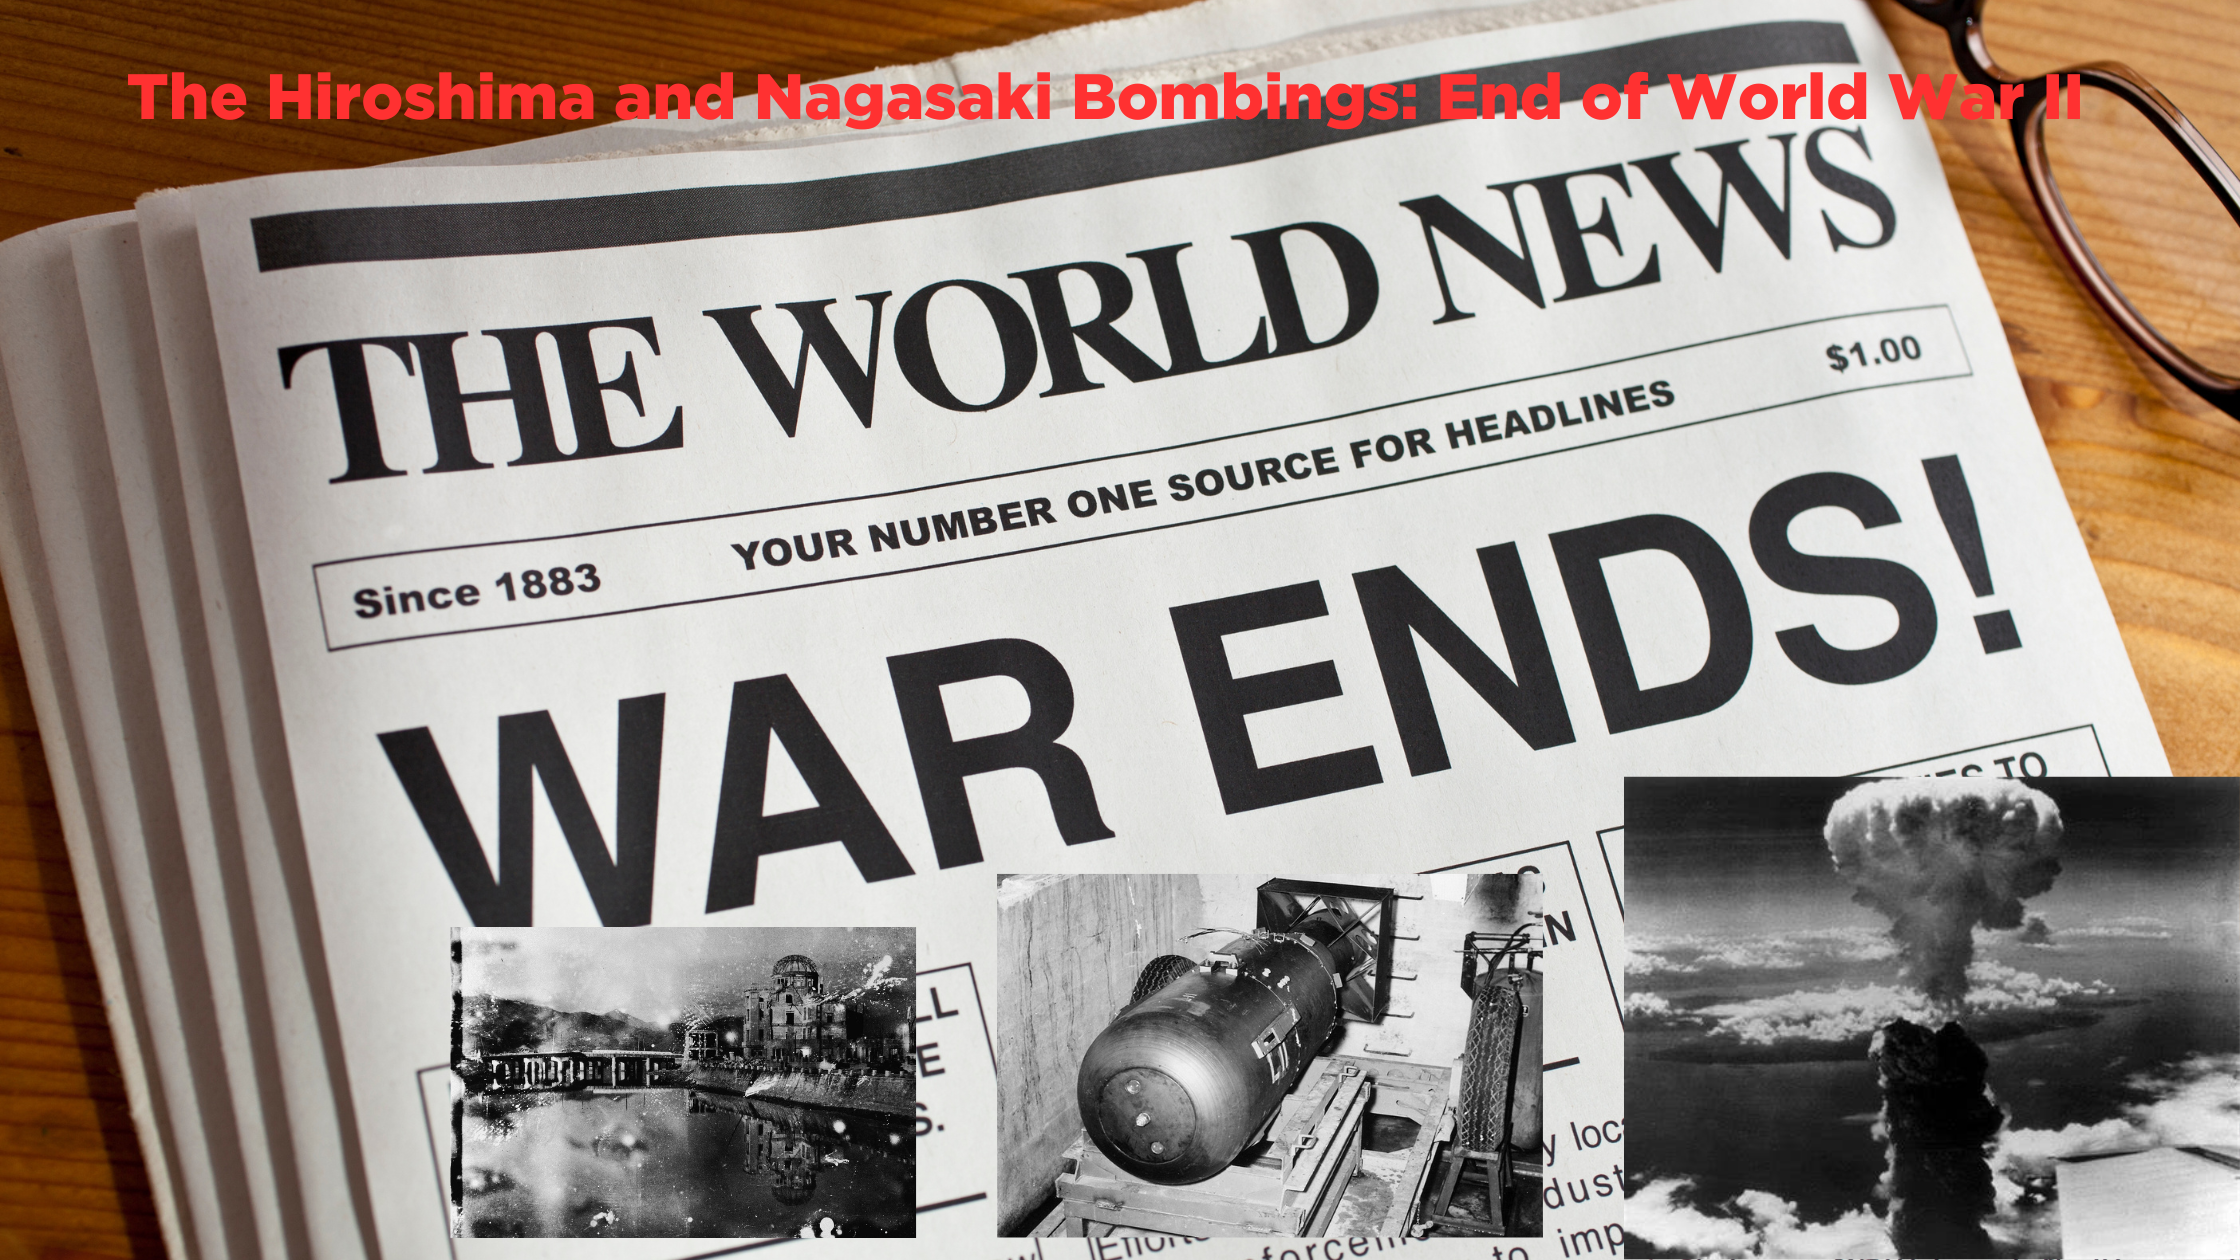 The Hiroshima and Nagasaki Bombings: End of World War II